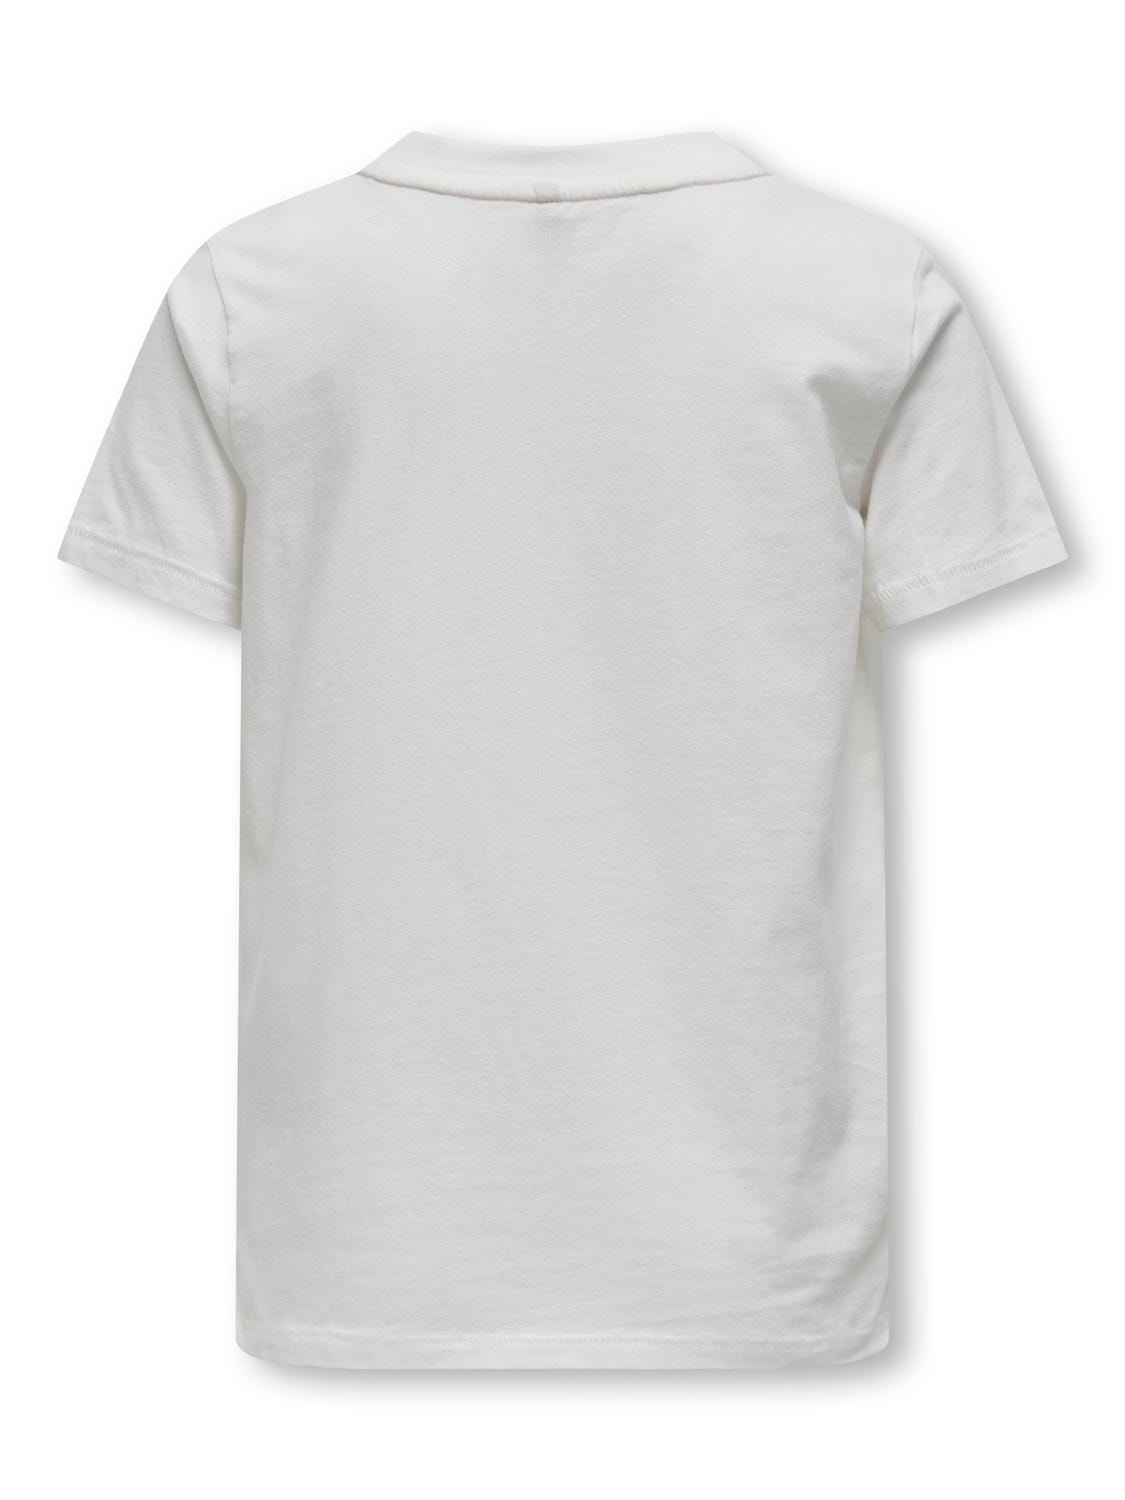 ONLY Box Fit Rundhals T-Shirt -Cloud Dancer - 15331149